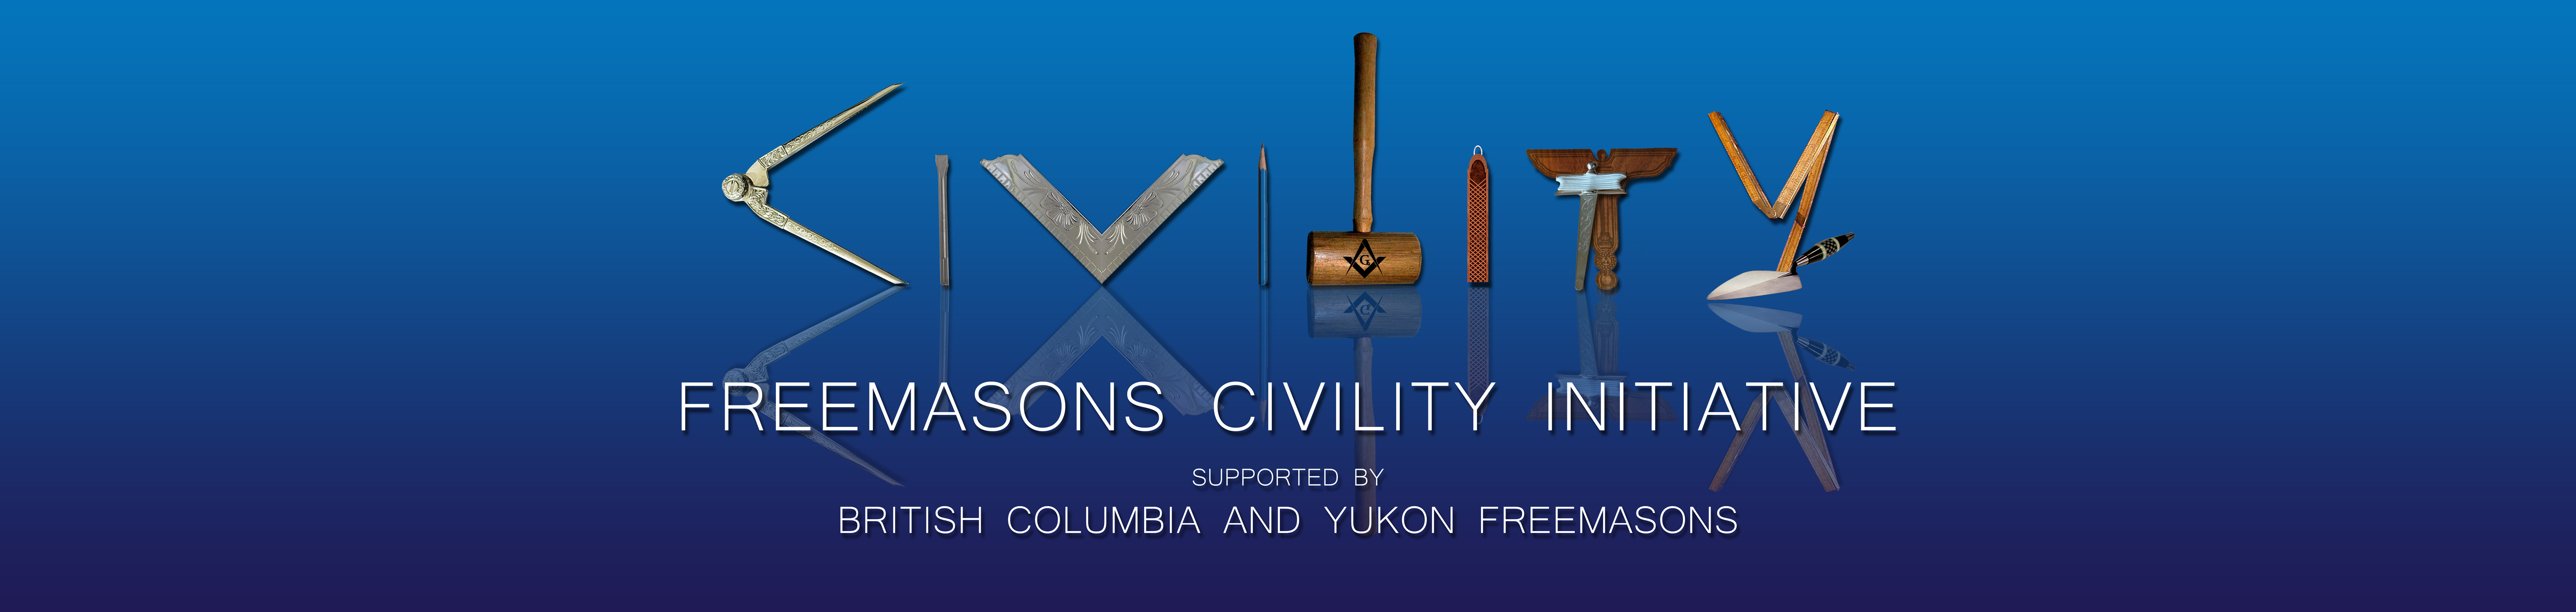 Freemasons Civility Initiative